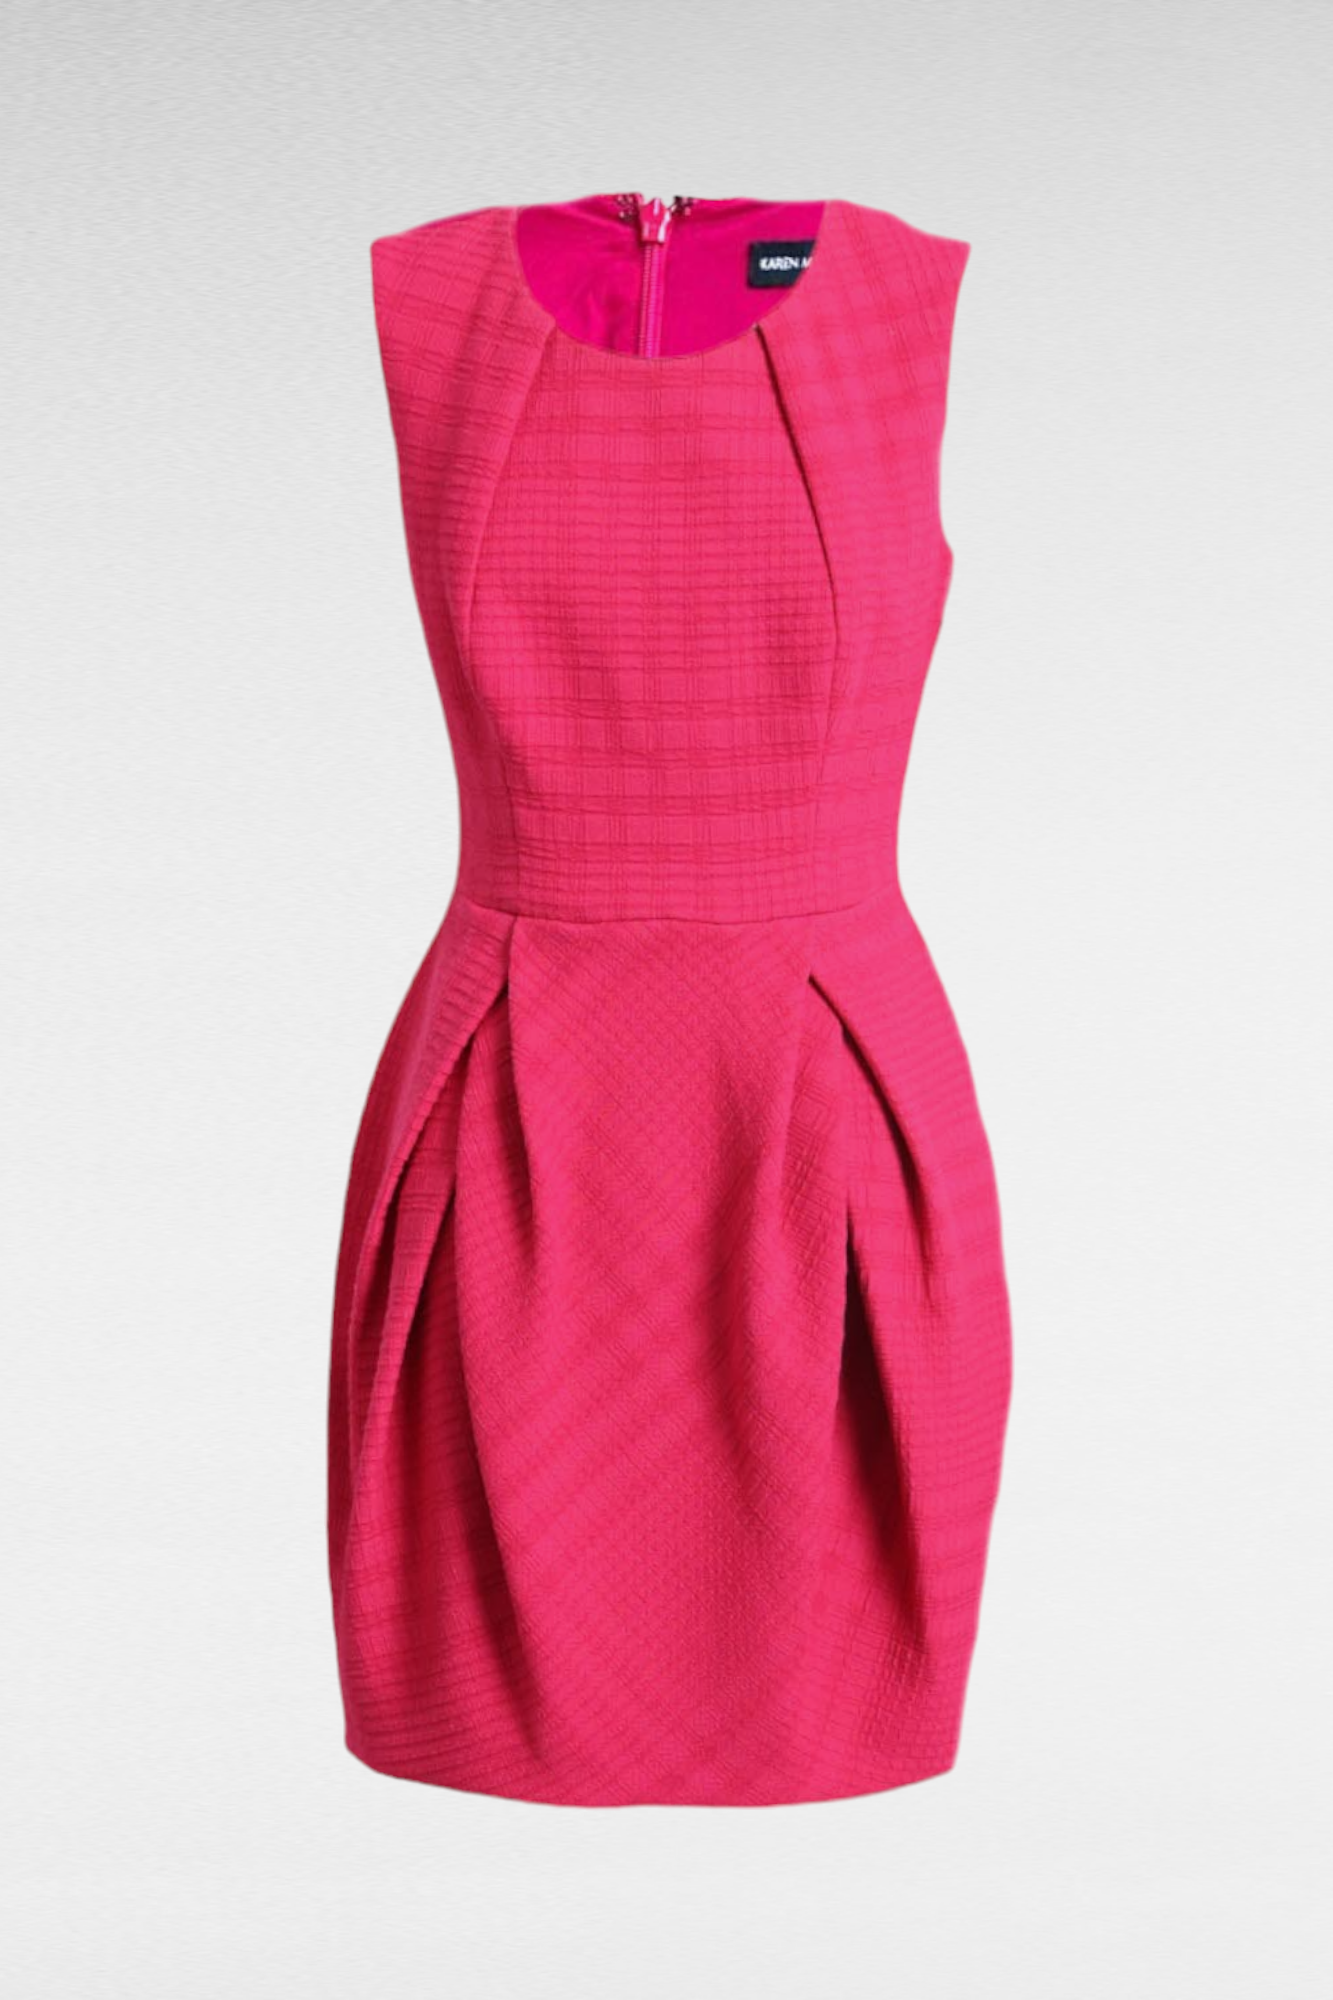 Karen Millen Sleeveless Cocktail Dress in Pink